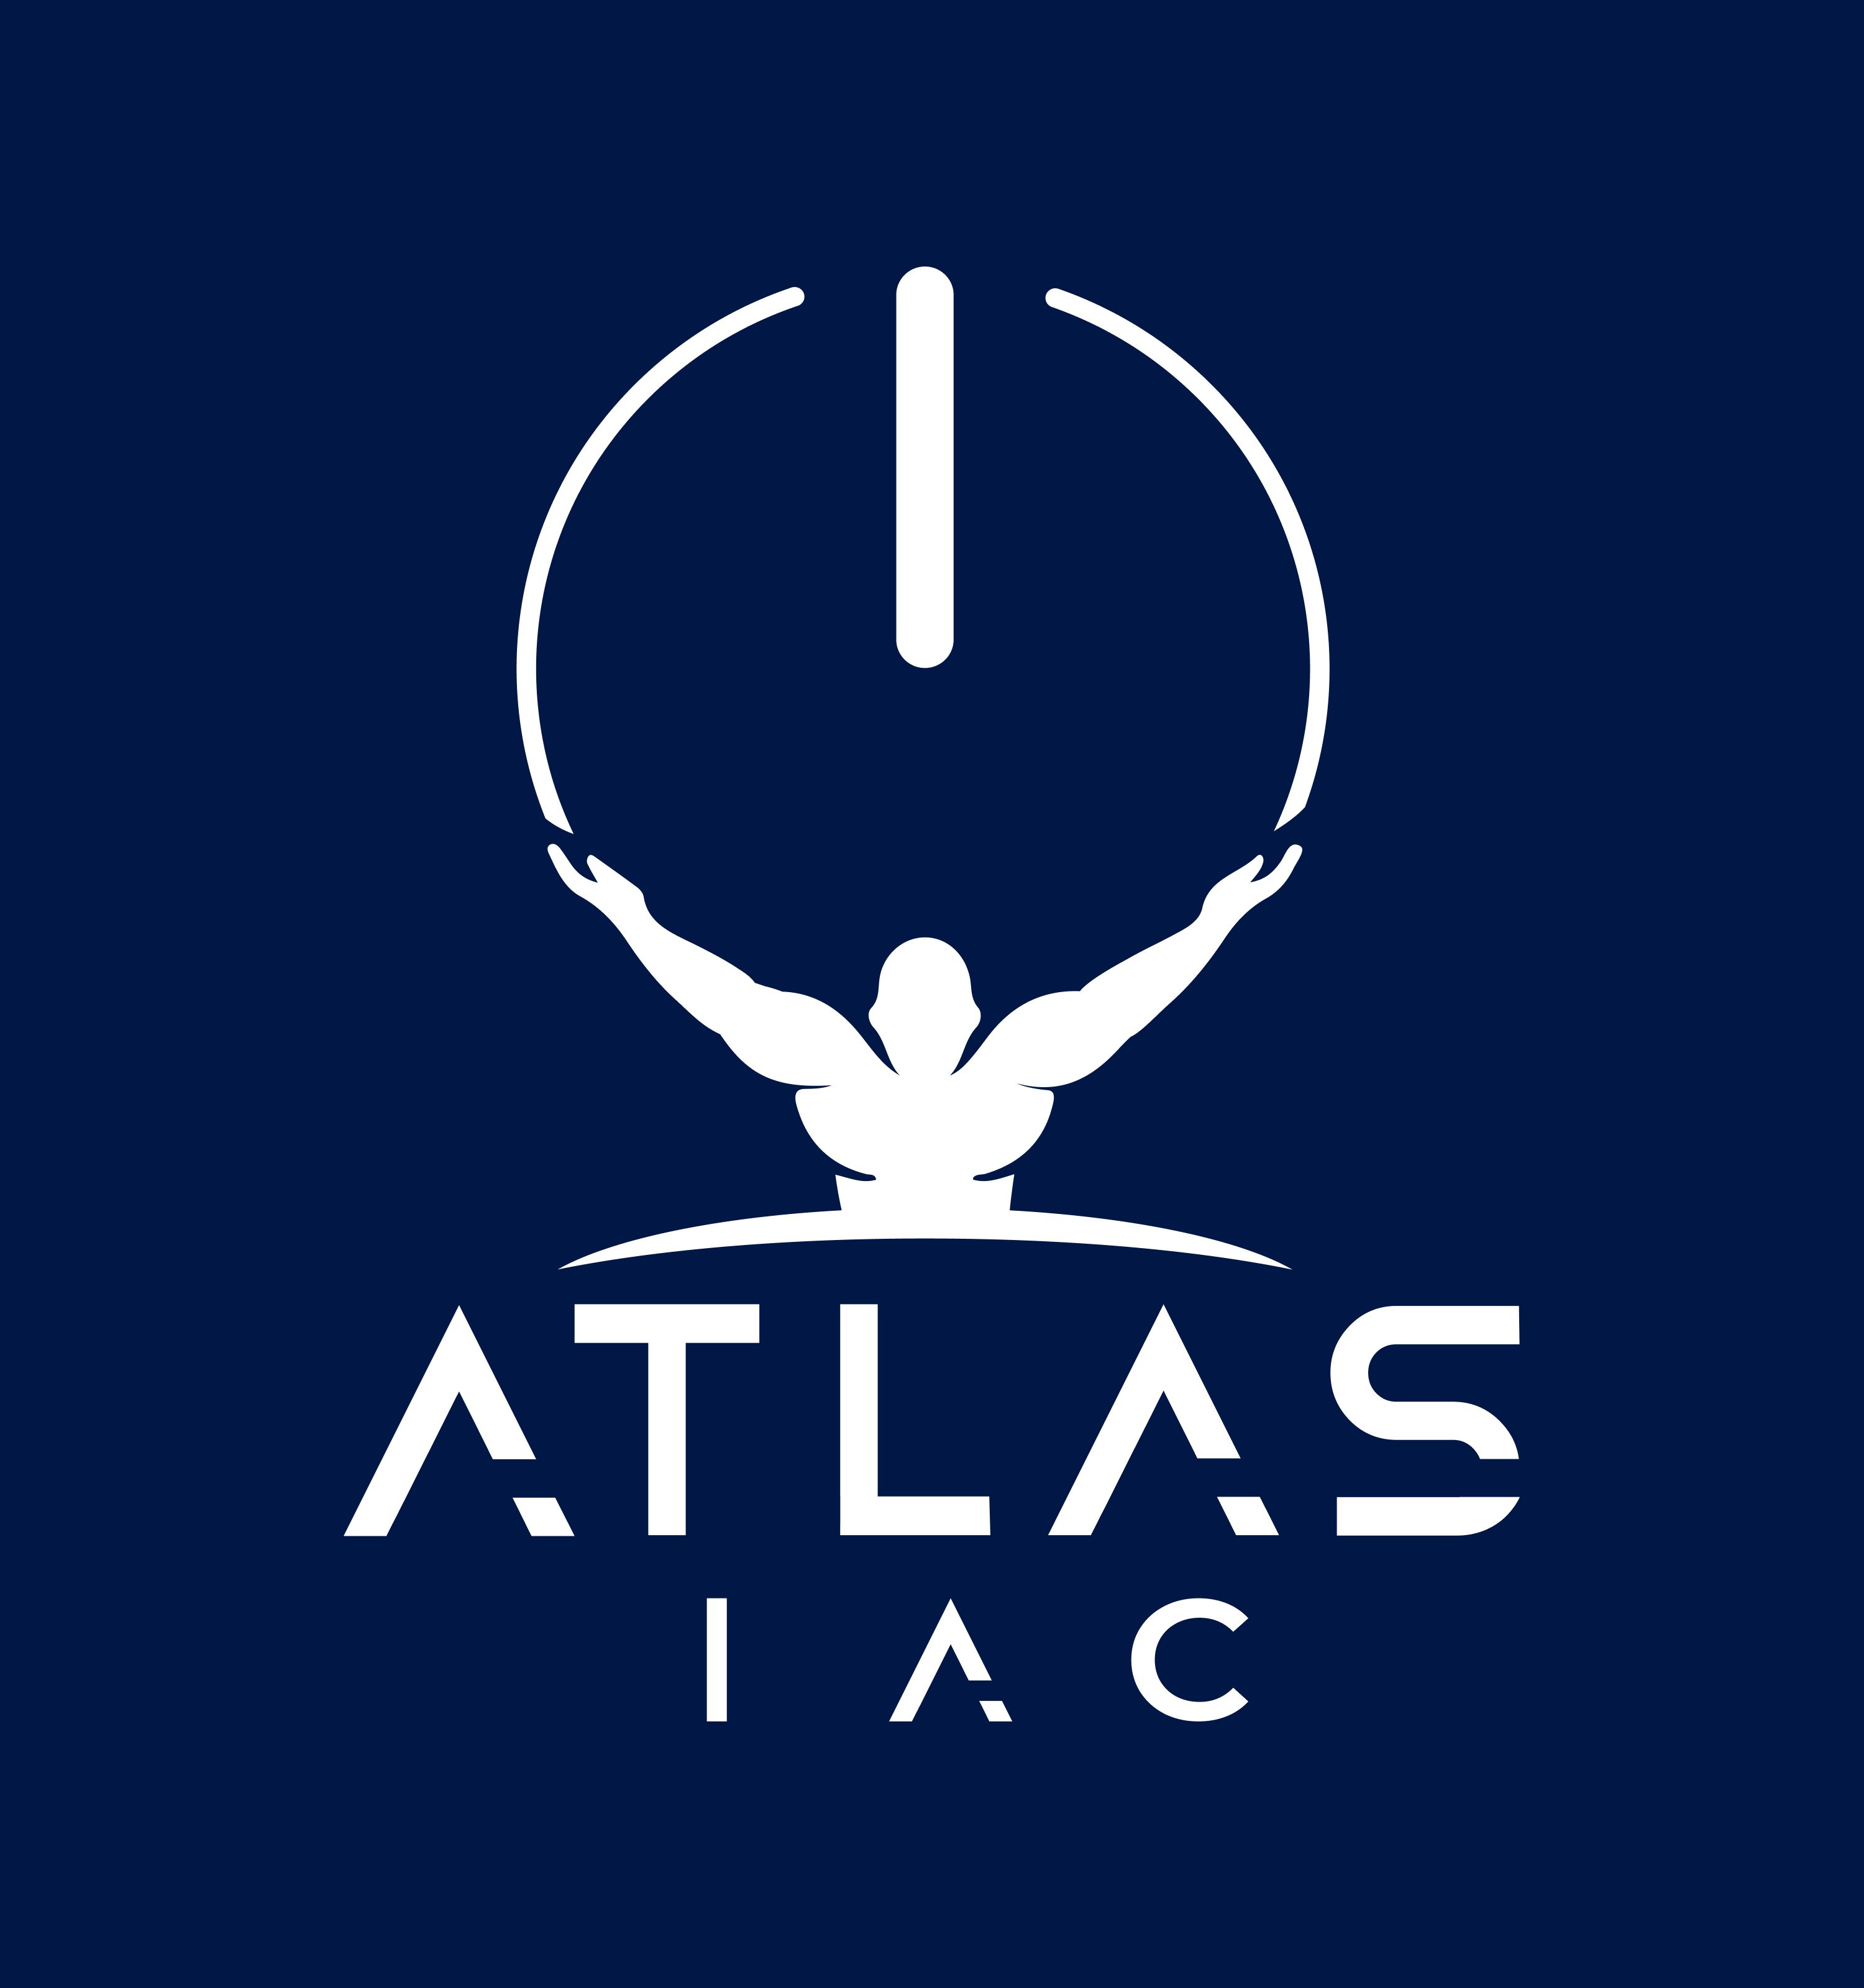 Atlas platform